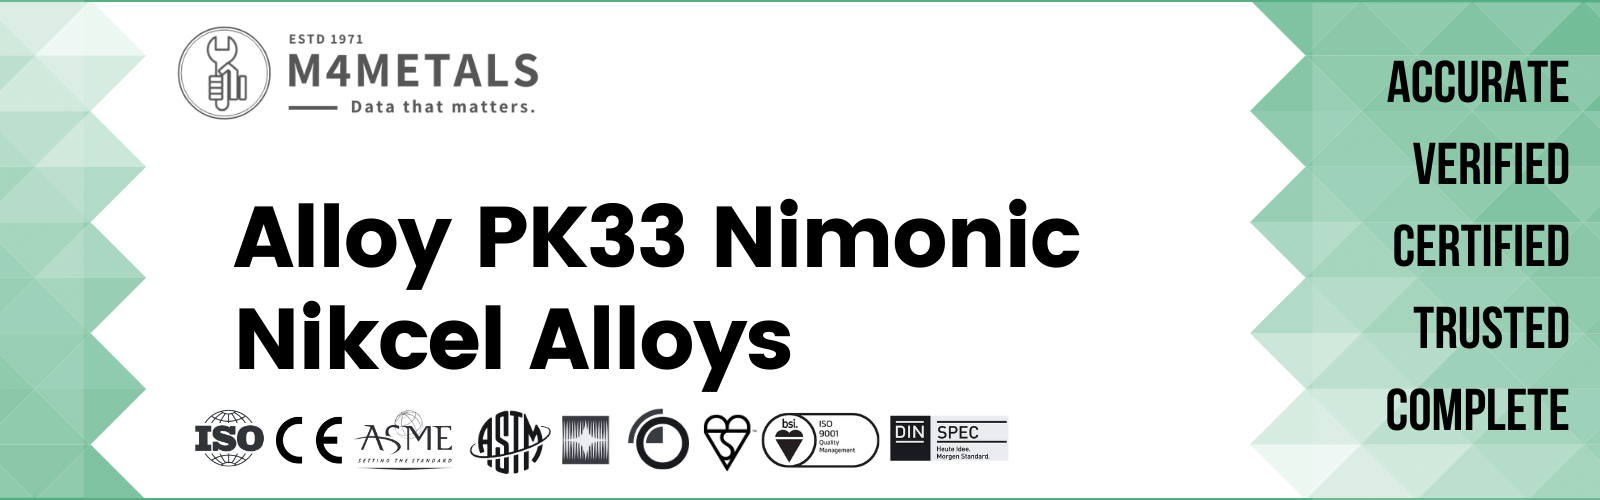 Nimonic Alloy PK33